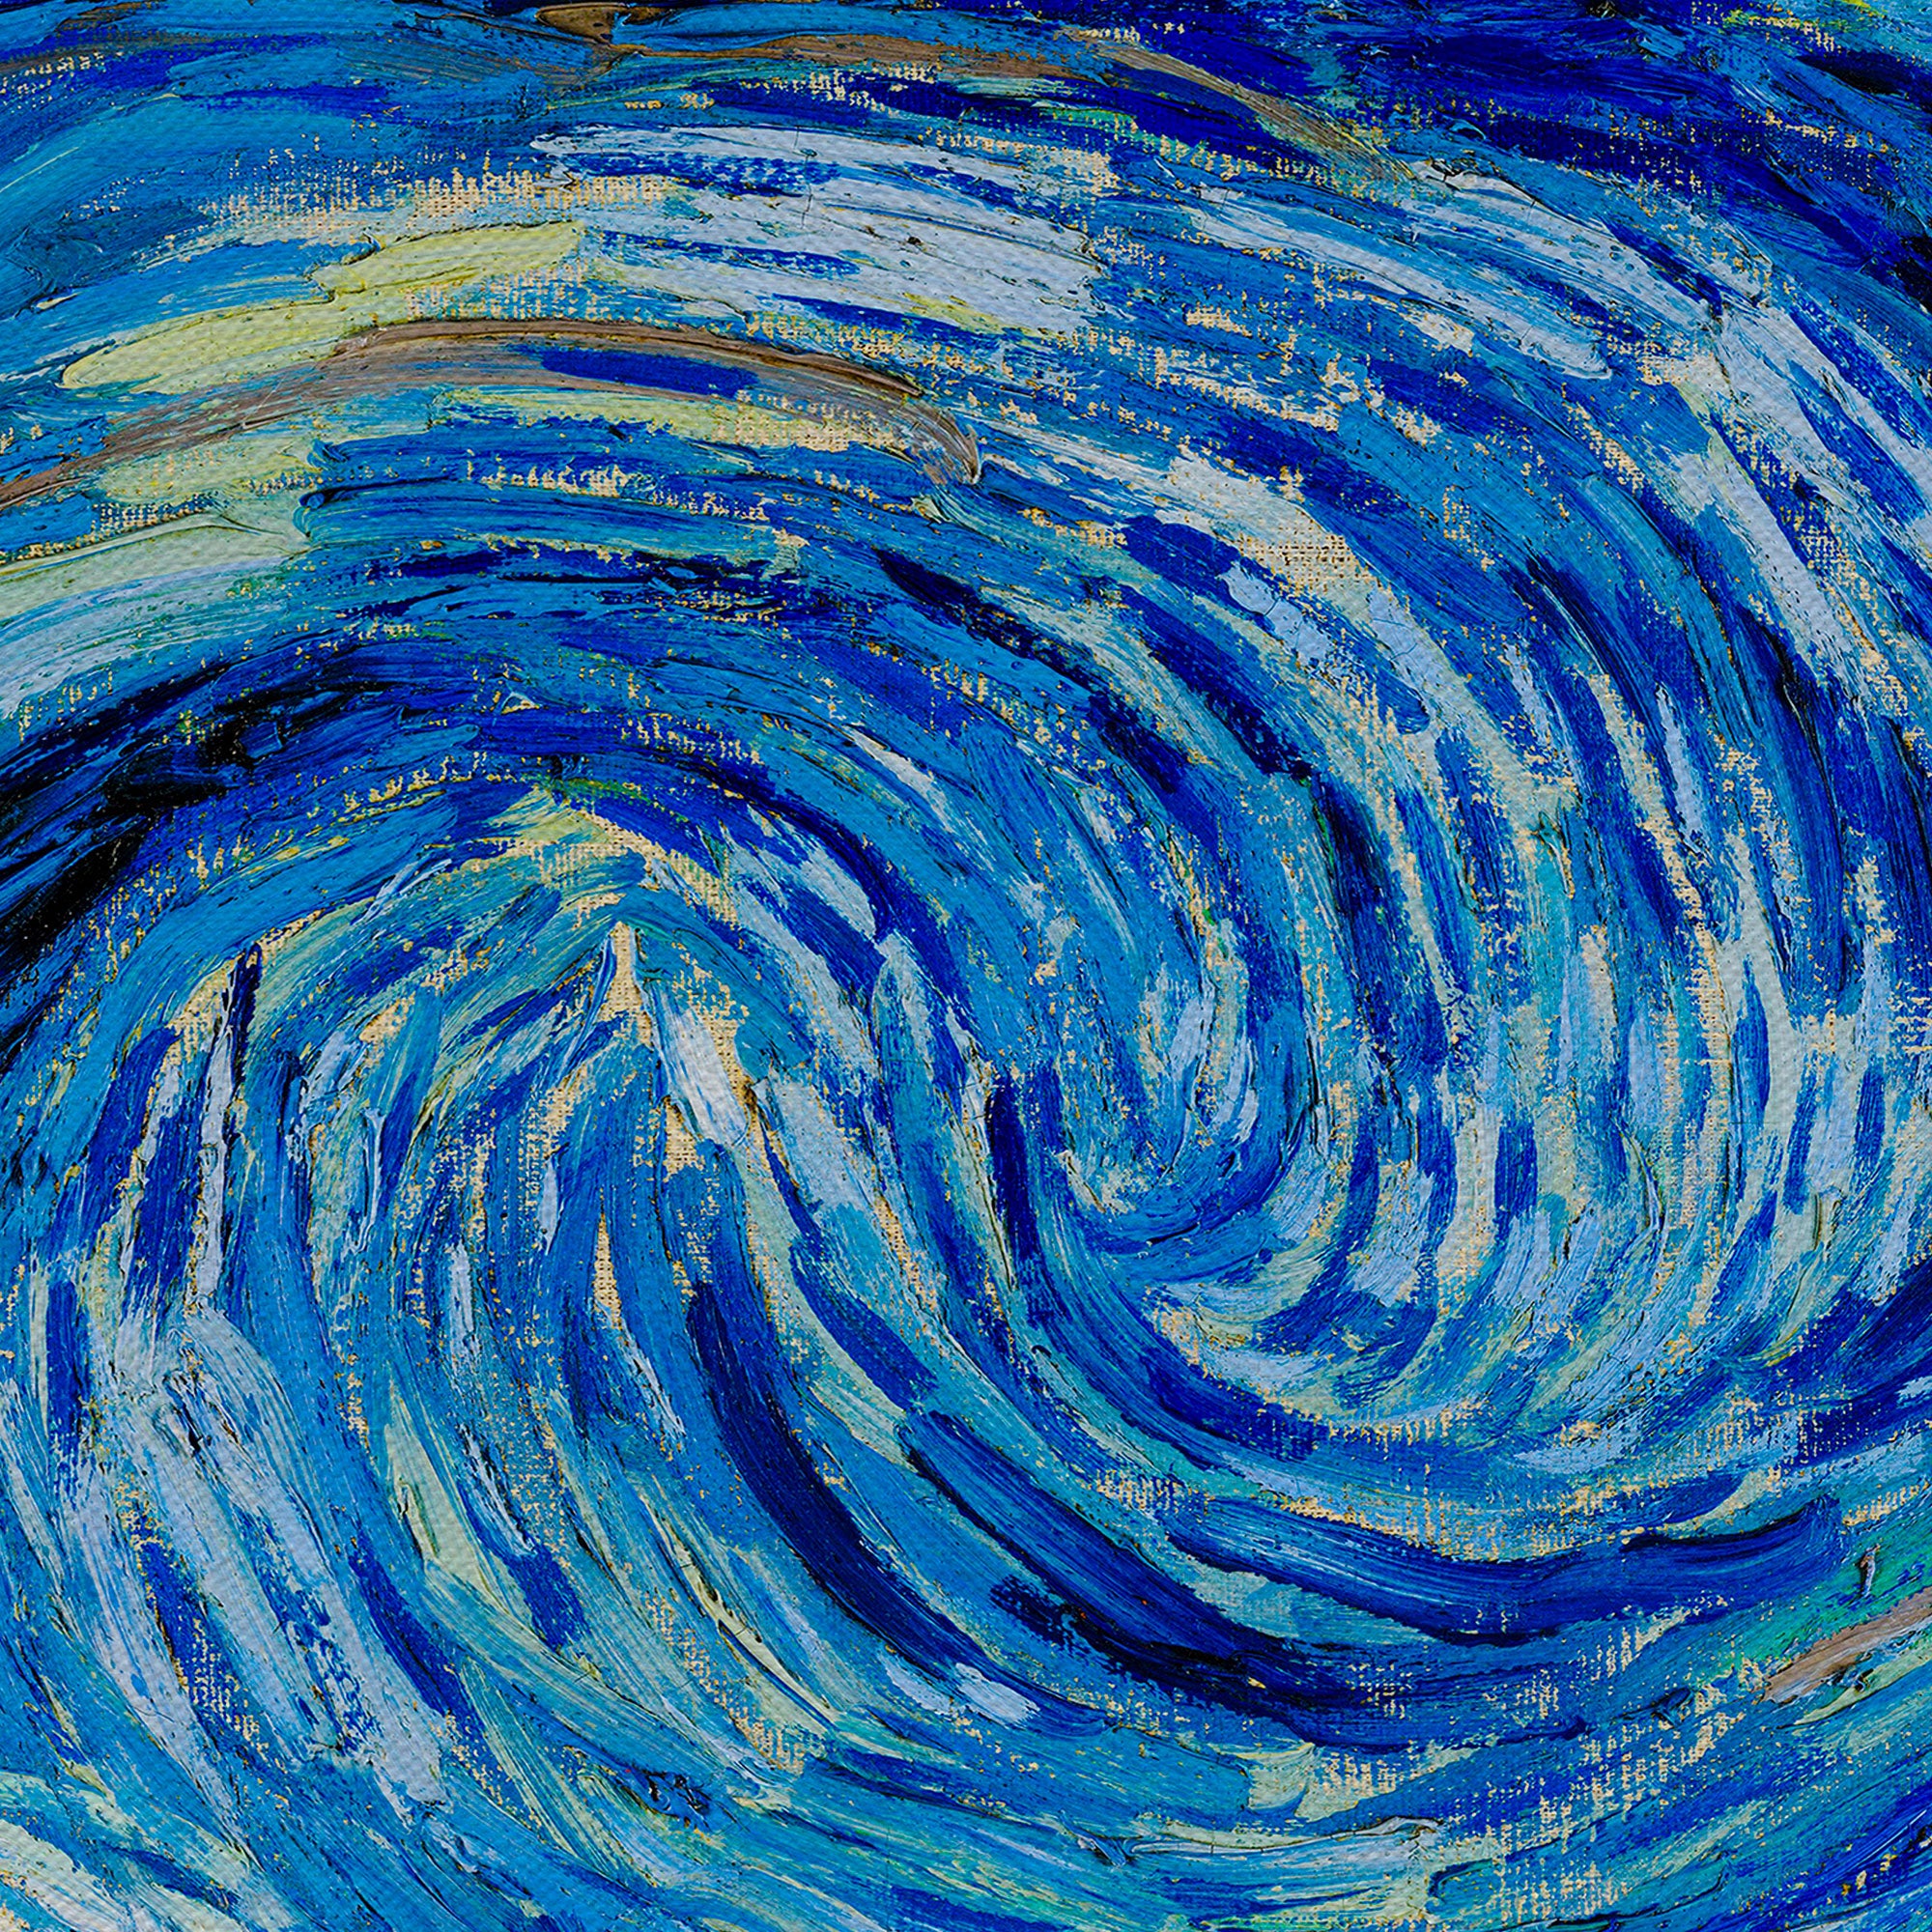 Vincent van Gogh Starry Hight Canvas Wall Art